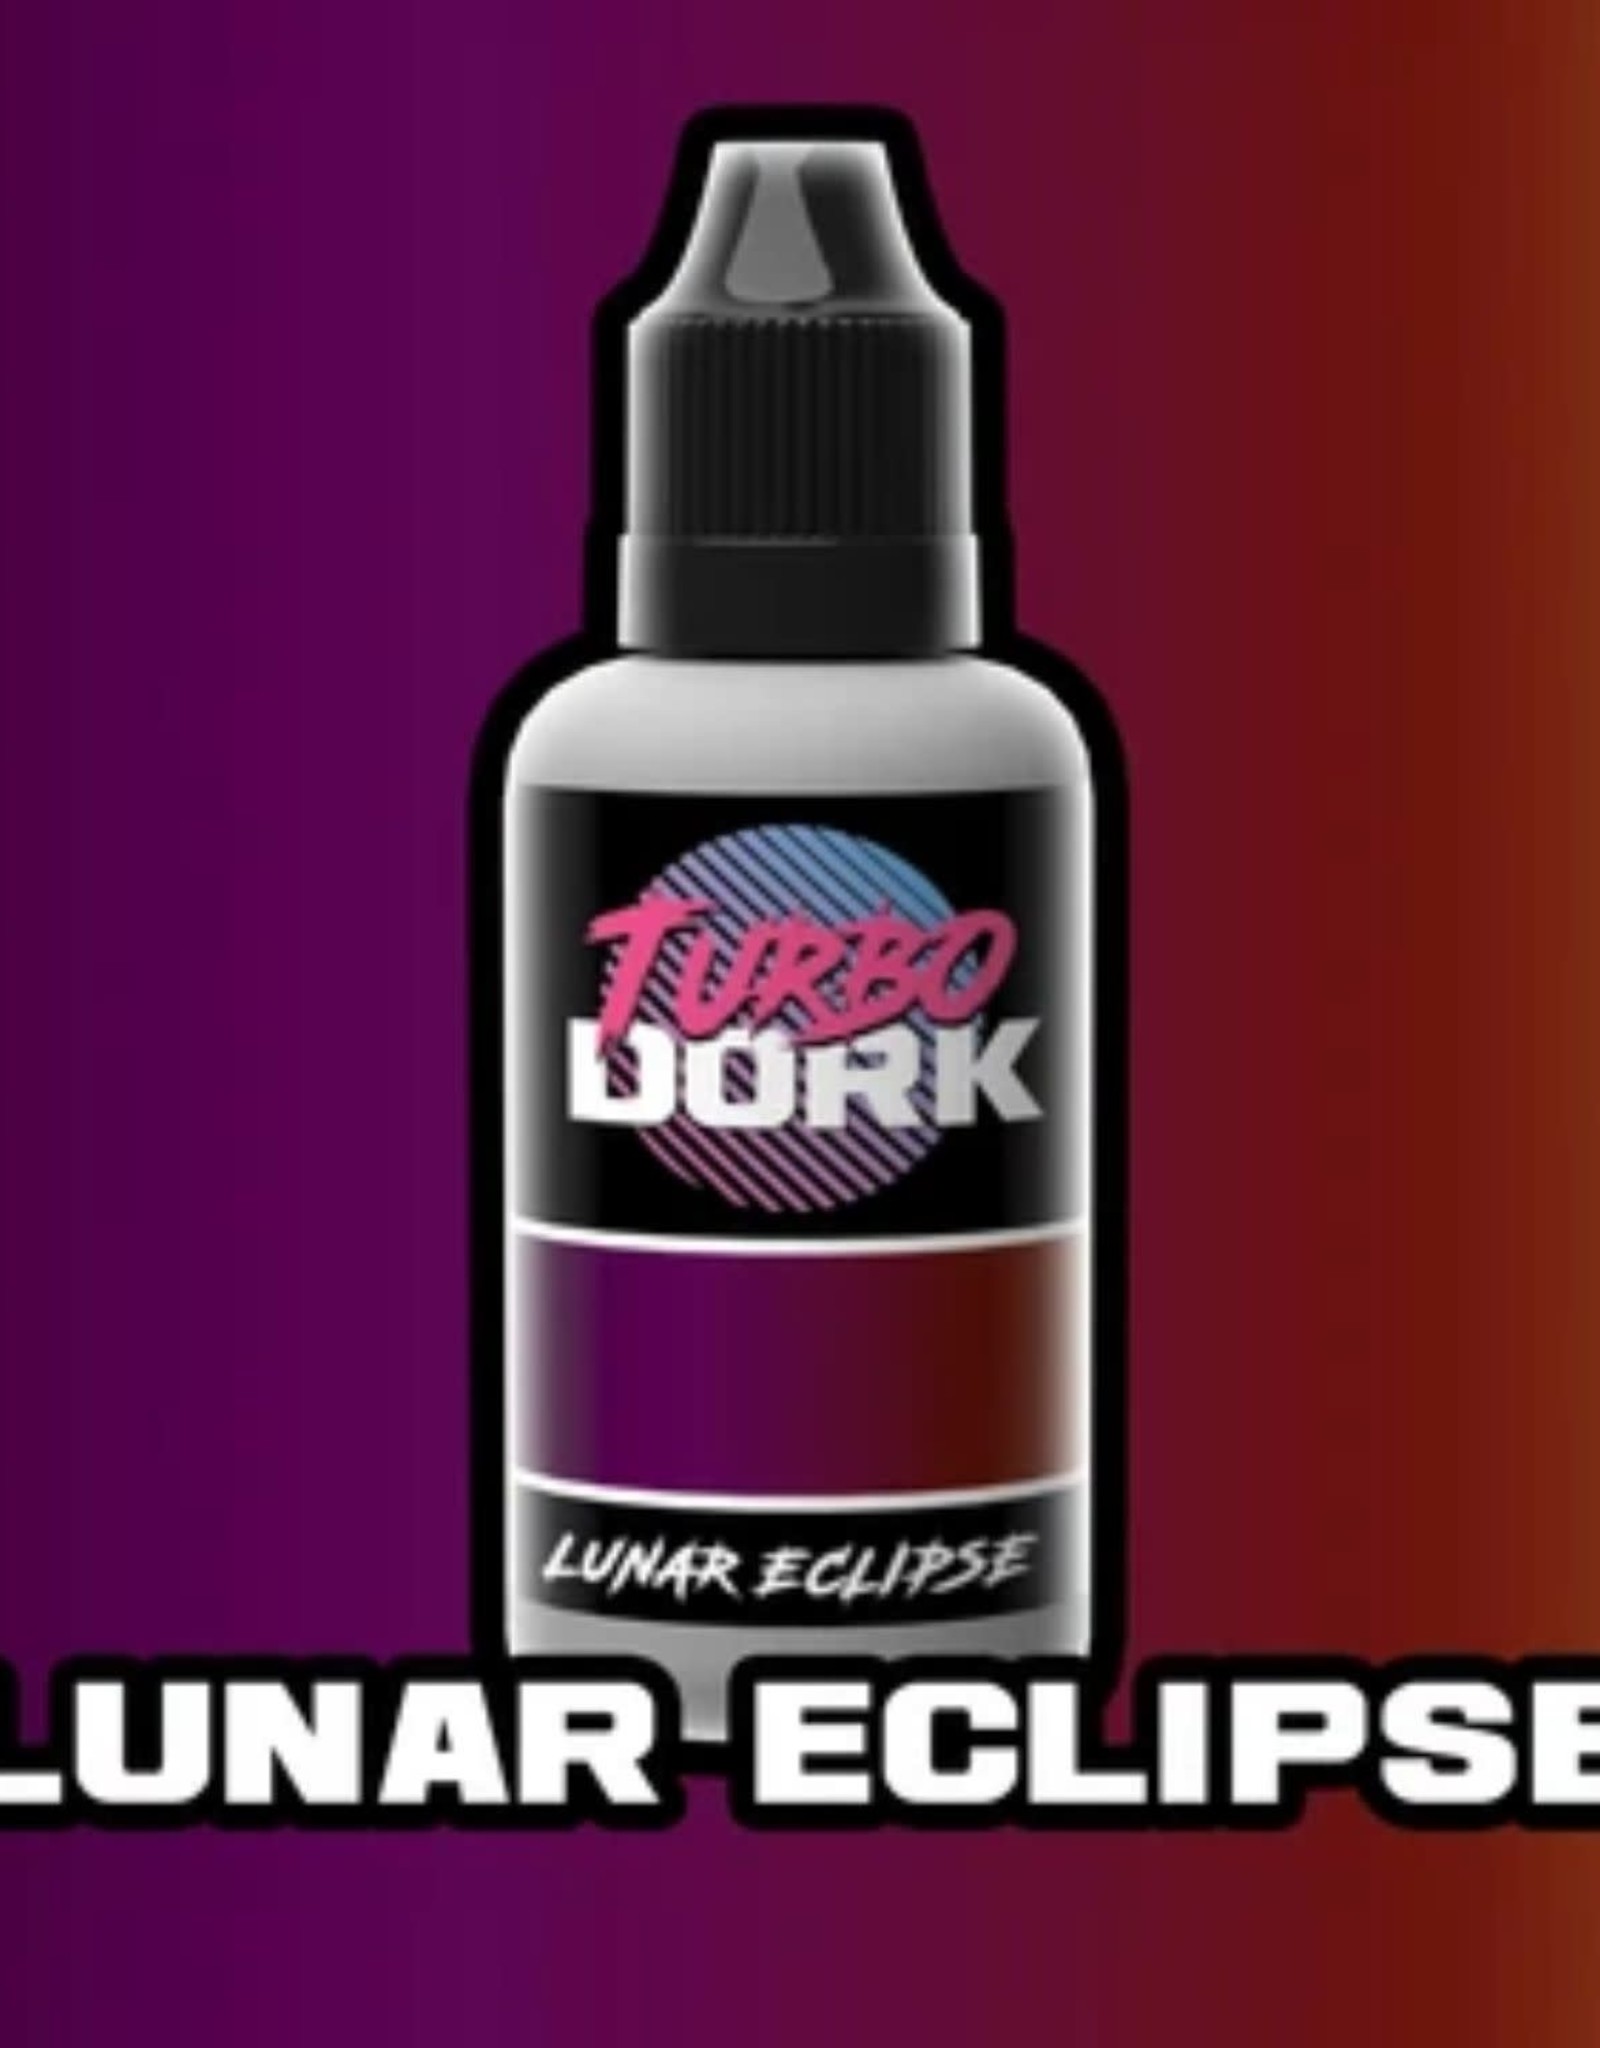 Turbo Dork Lunar Eclipse - Turboshift